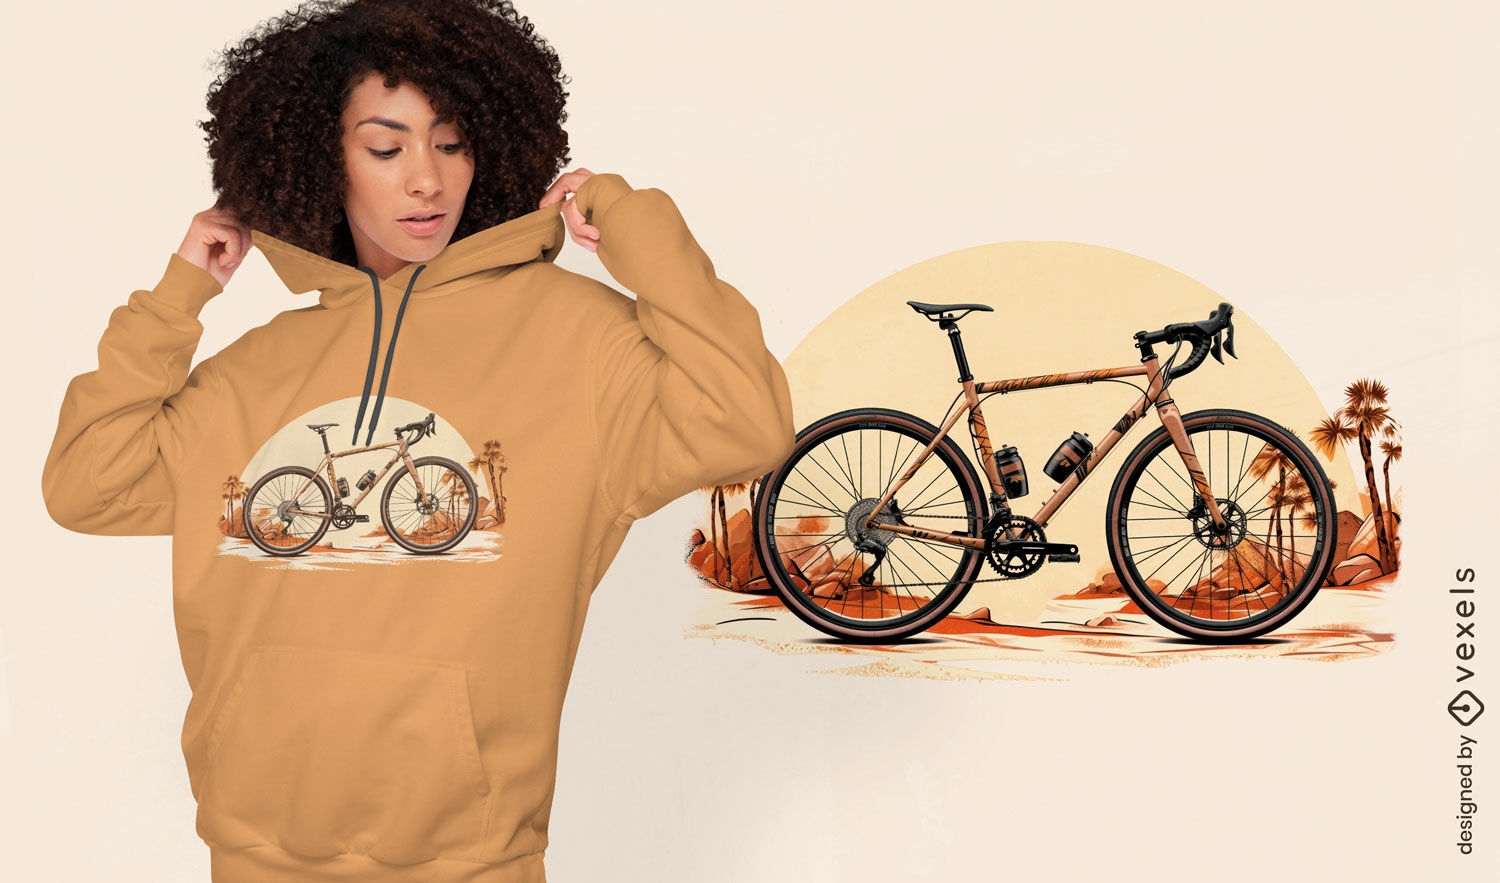 Dise?o de camiseta con ilustraci?n de bicicleta.